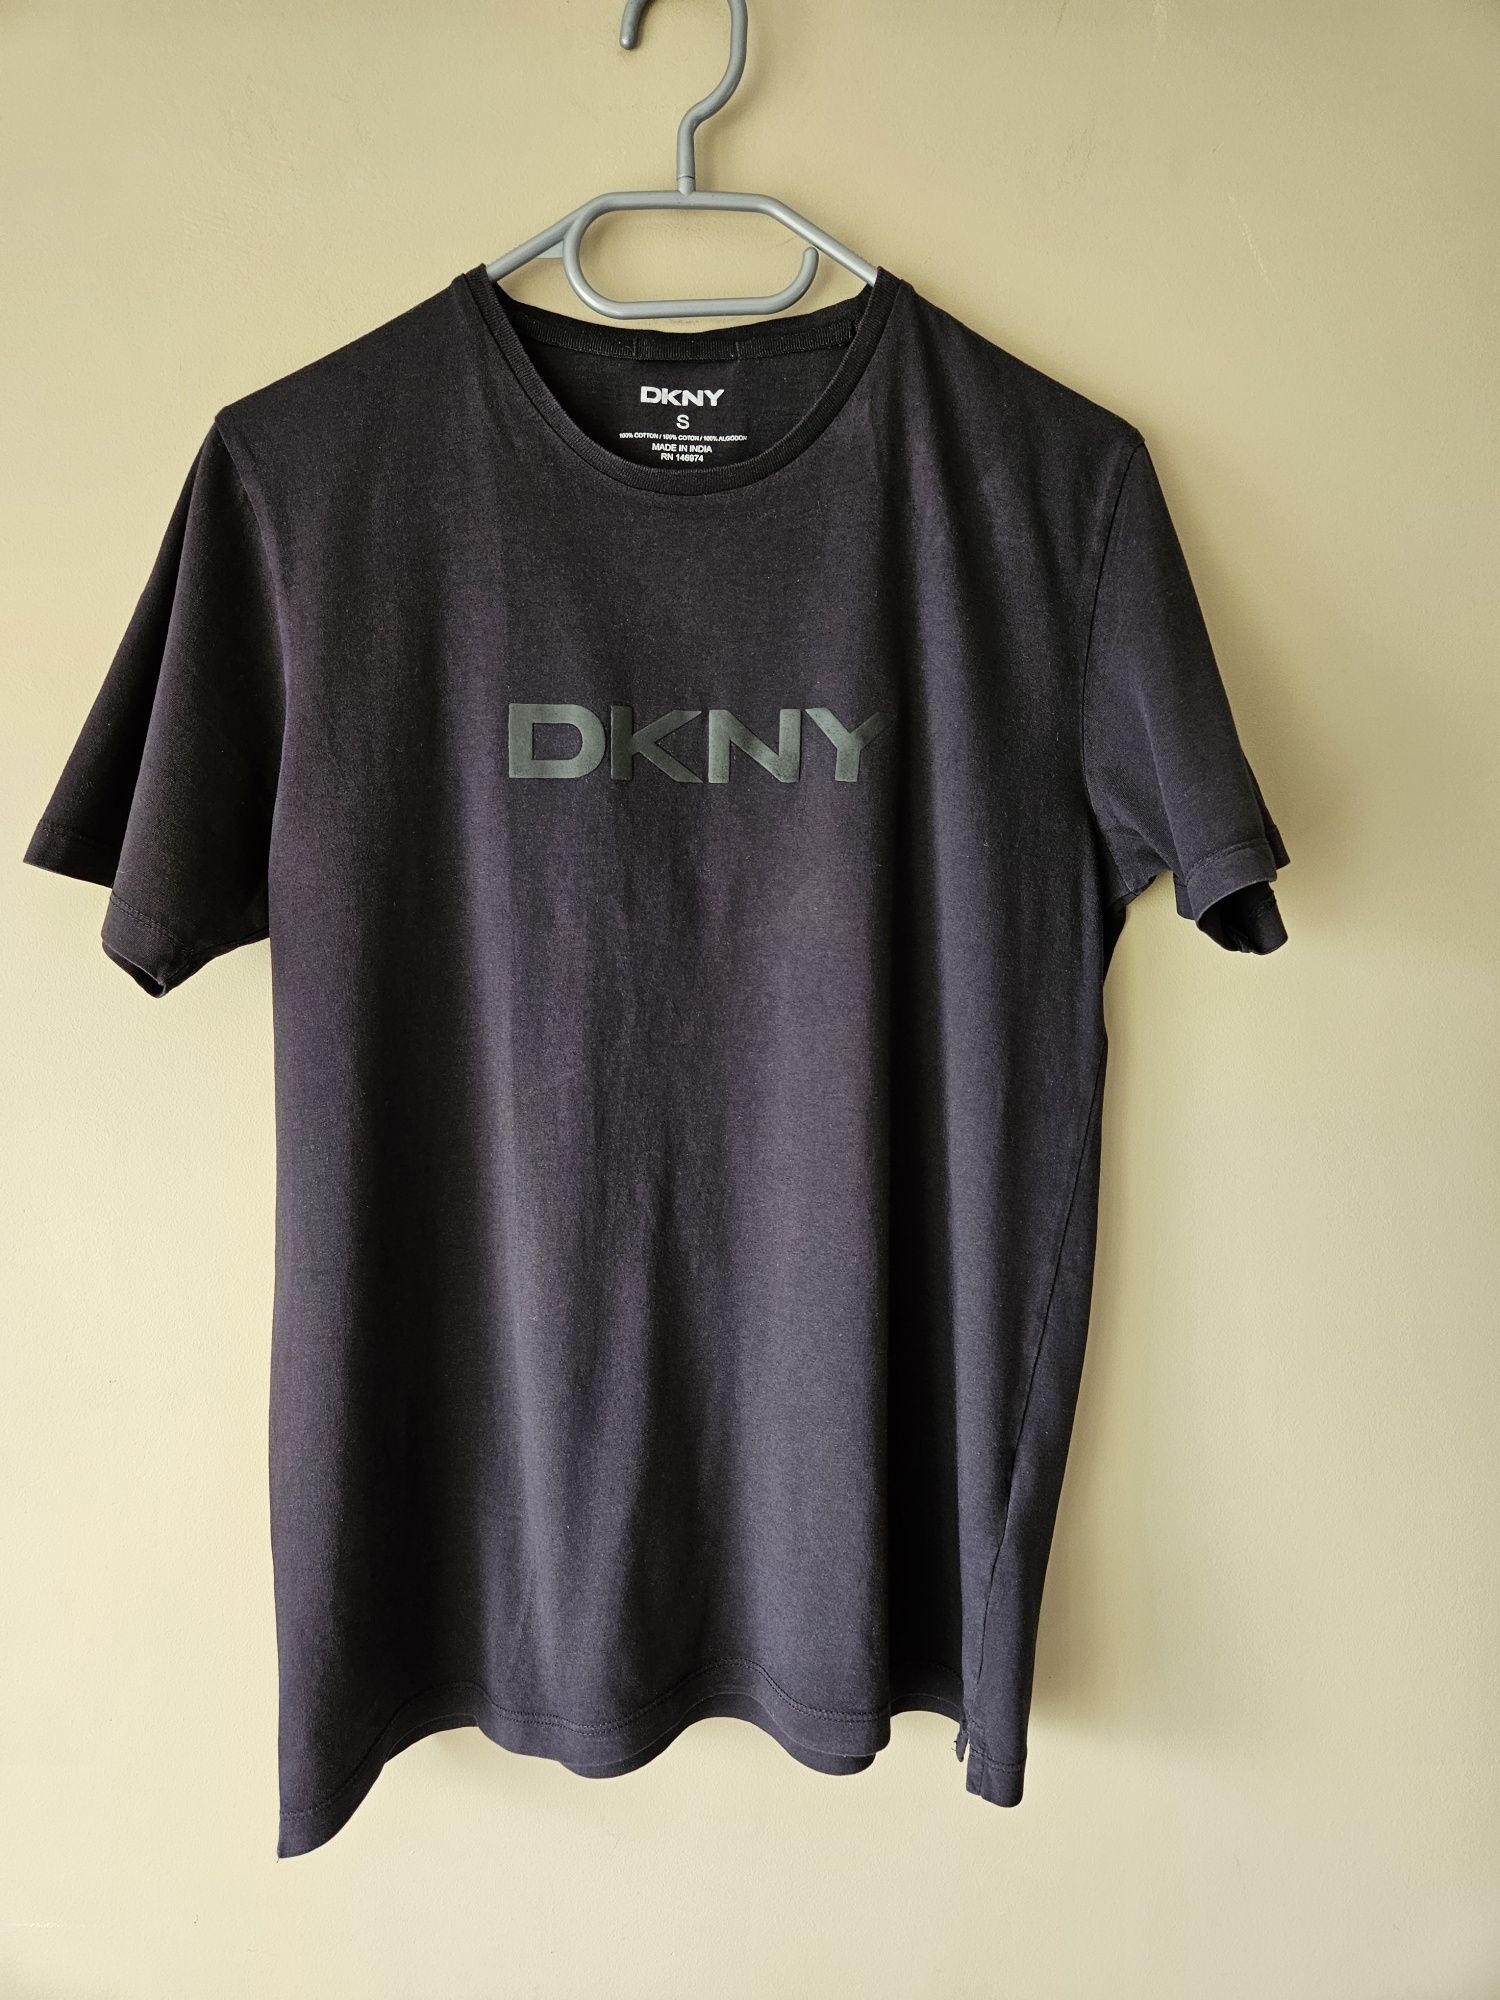 DKNY t-shirt rozmiar S